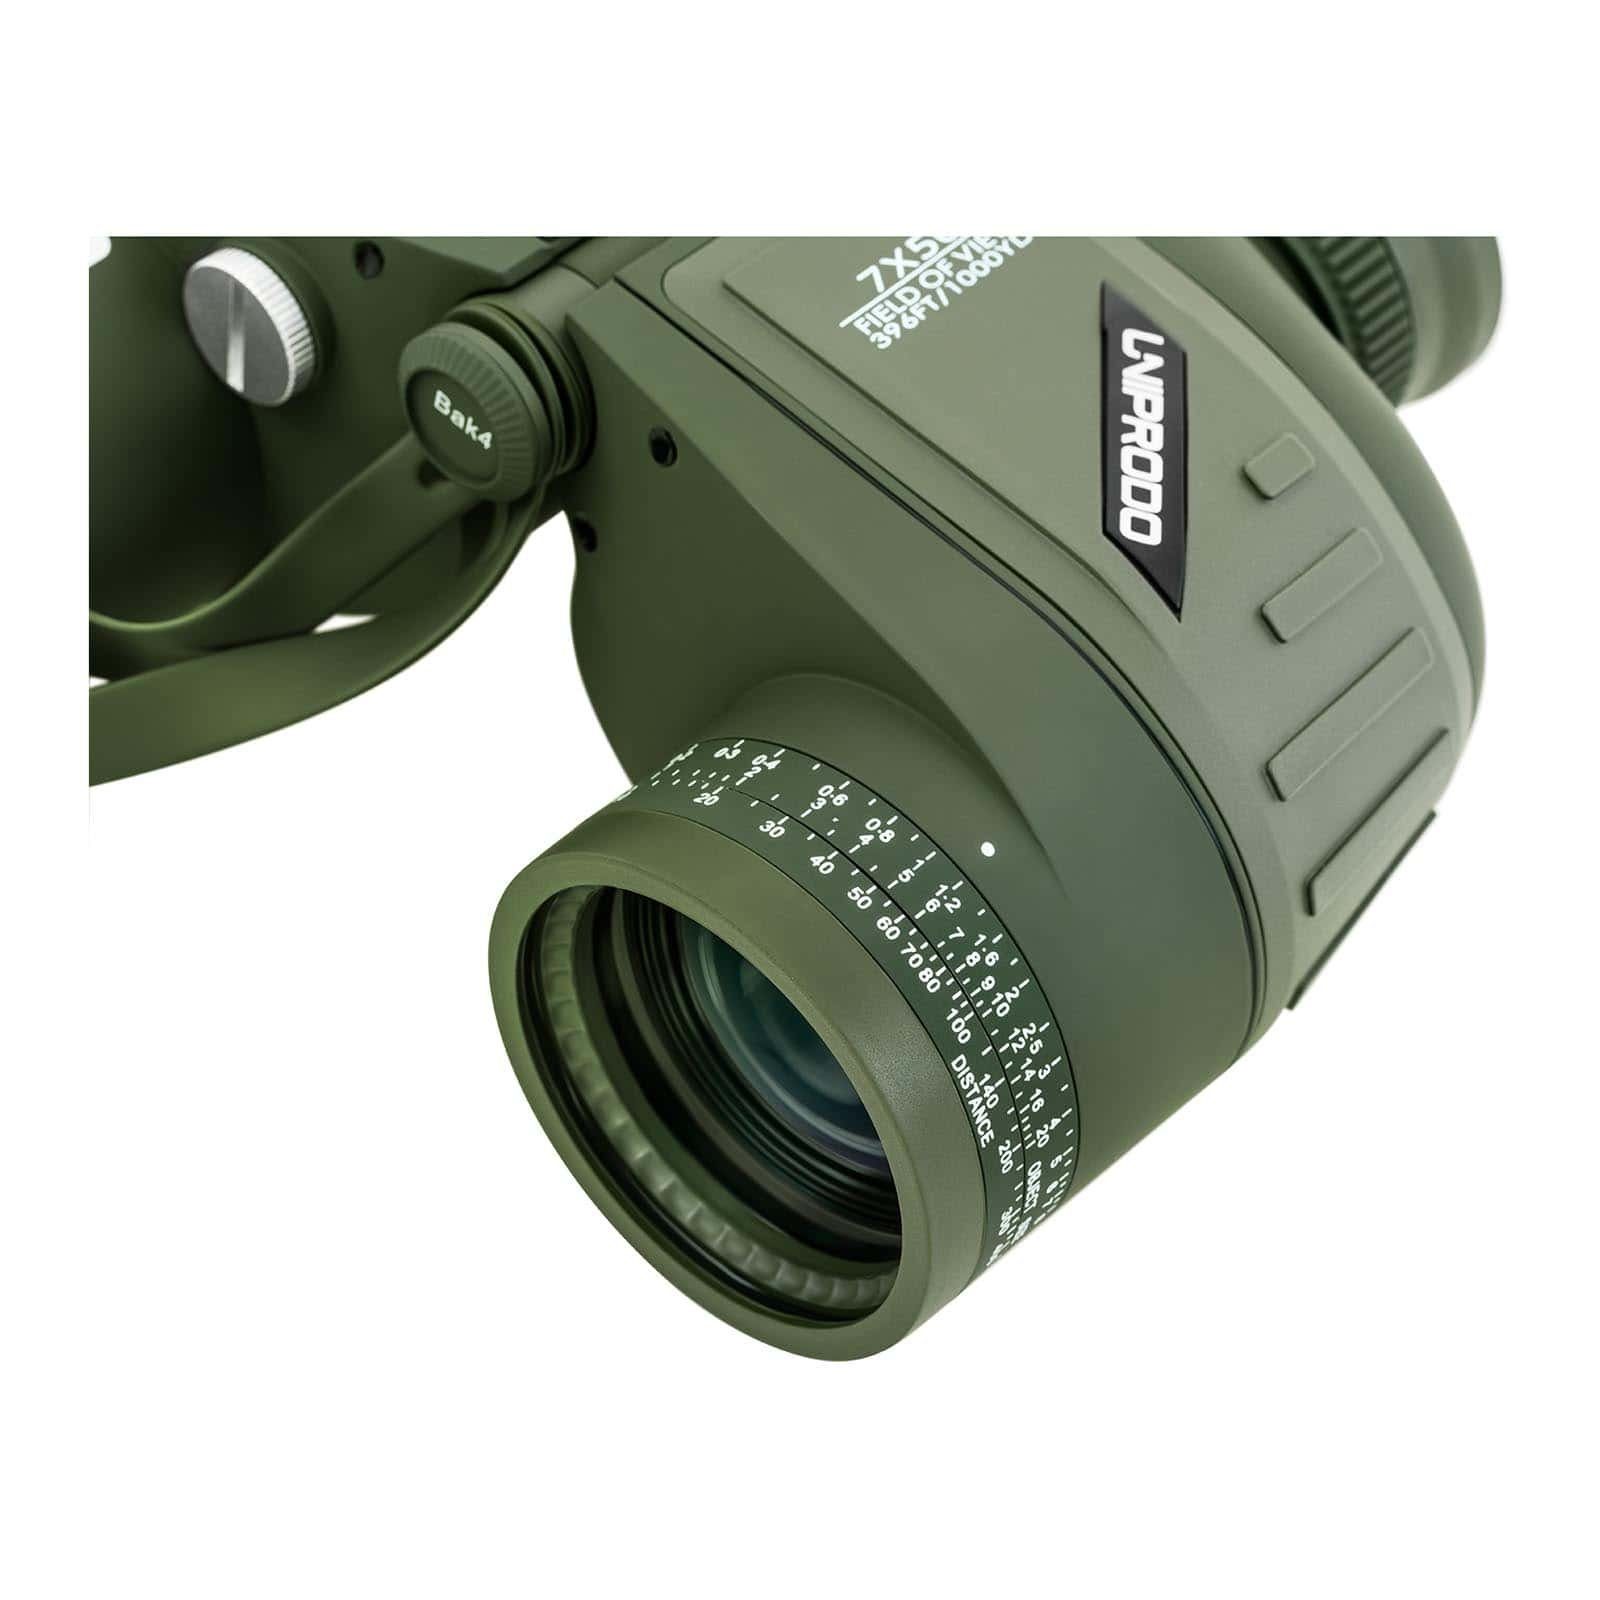 Jagdfernglas Uniprodo Feldstecher Fernglas BK-7 Vergrößerung Binocular 7-fach